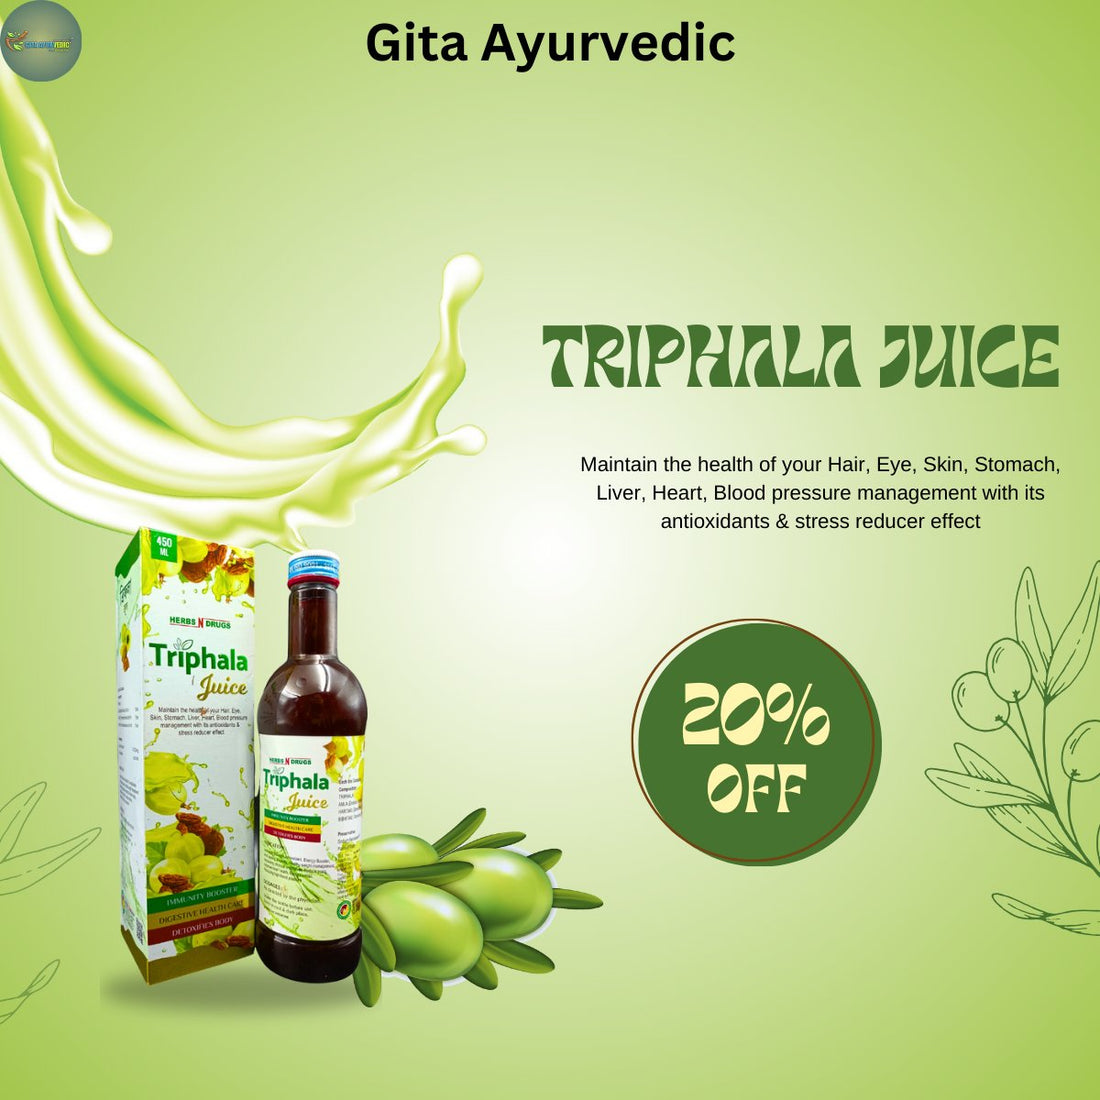 Triphala Benefits and Side Effects - GITA